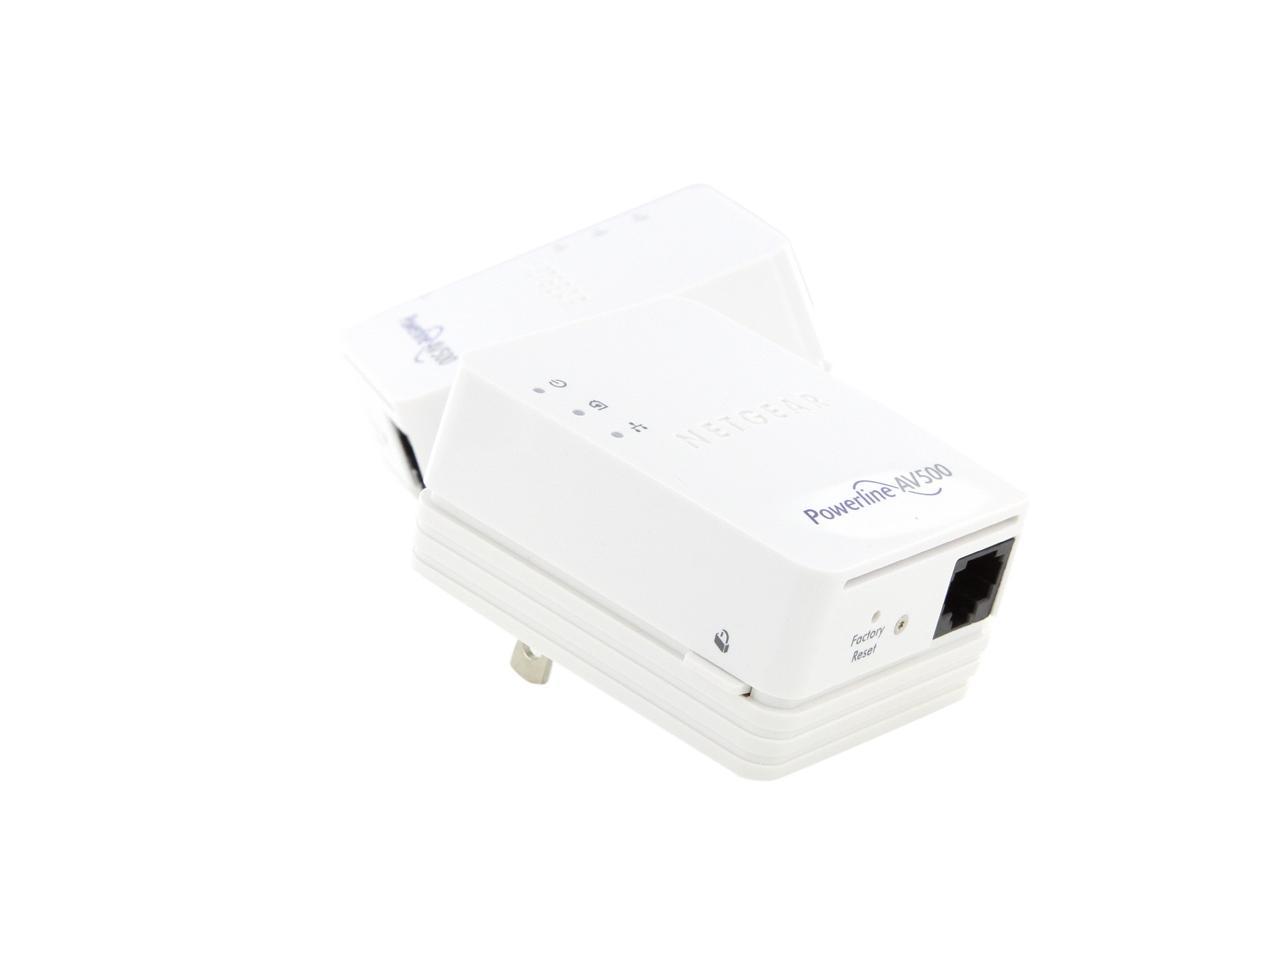 Homeplug AV Pac Netgear XAVB5201 Powerline 500Mbps Network Adapter IEEE 802.3 